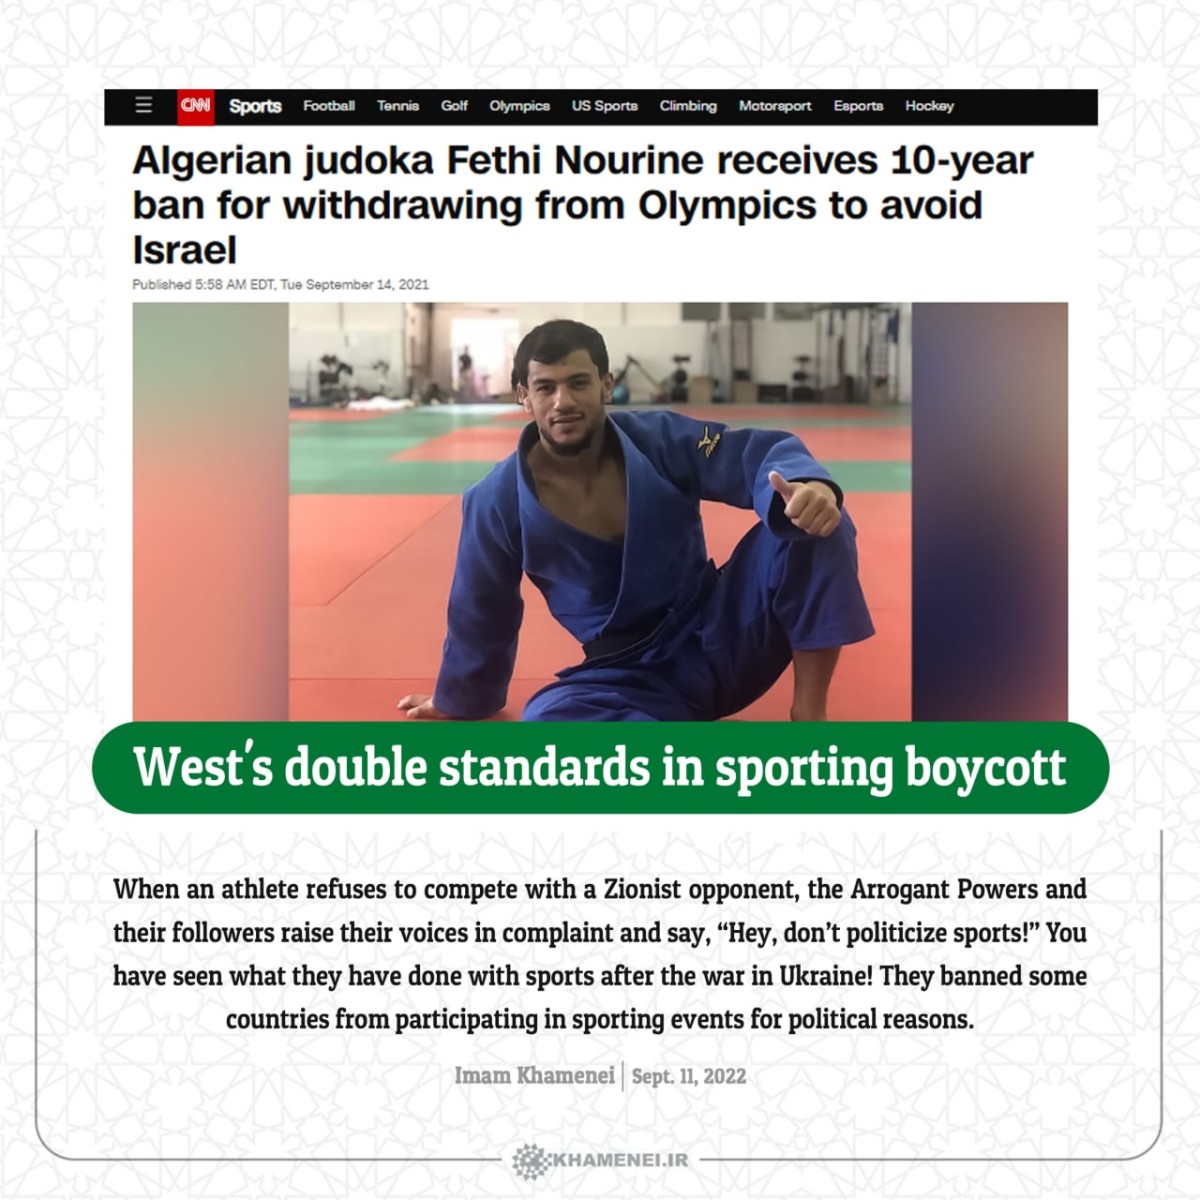 West's double standards in sporting boycott